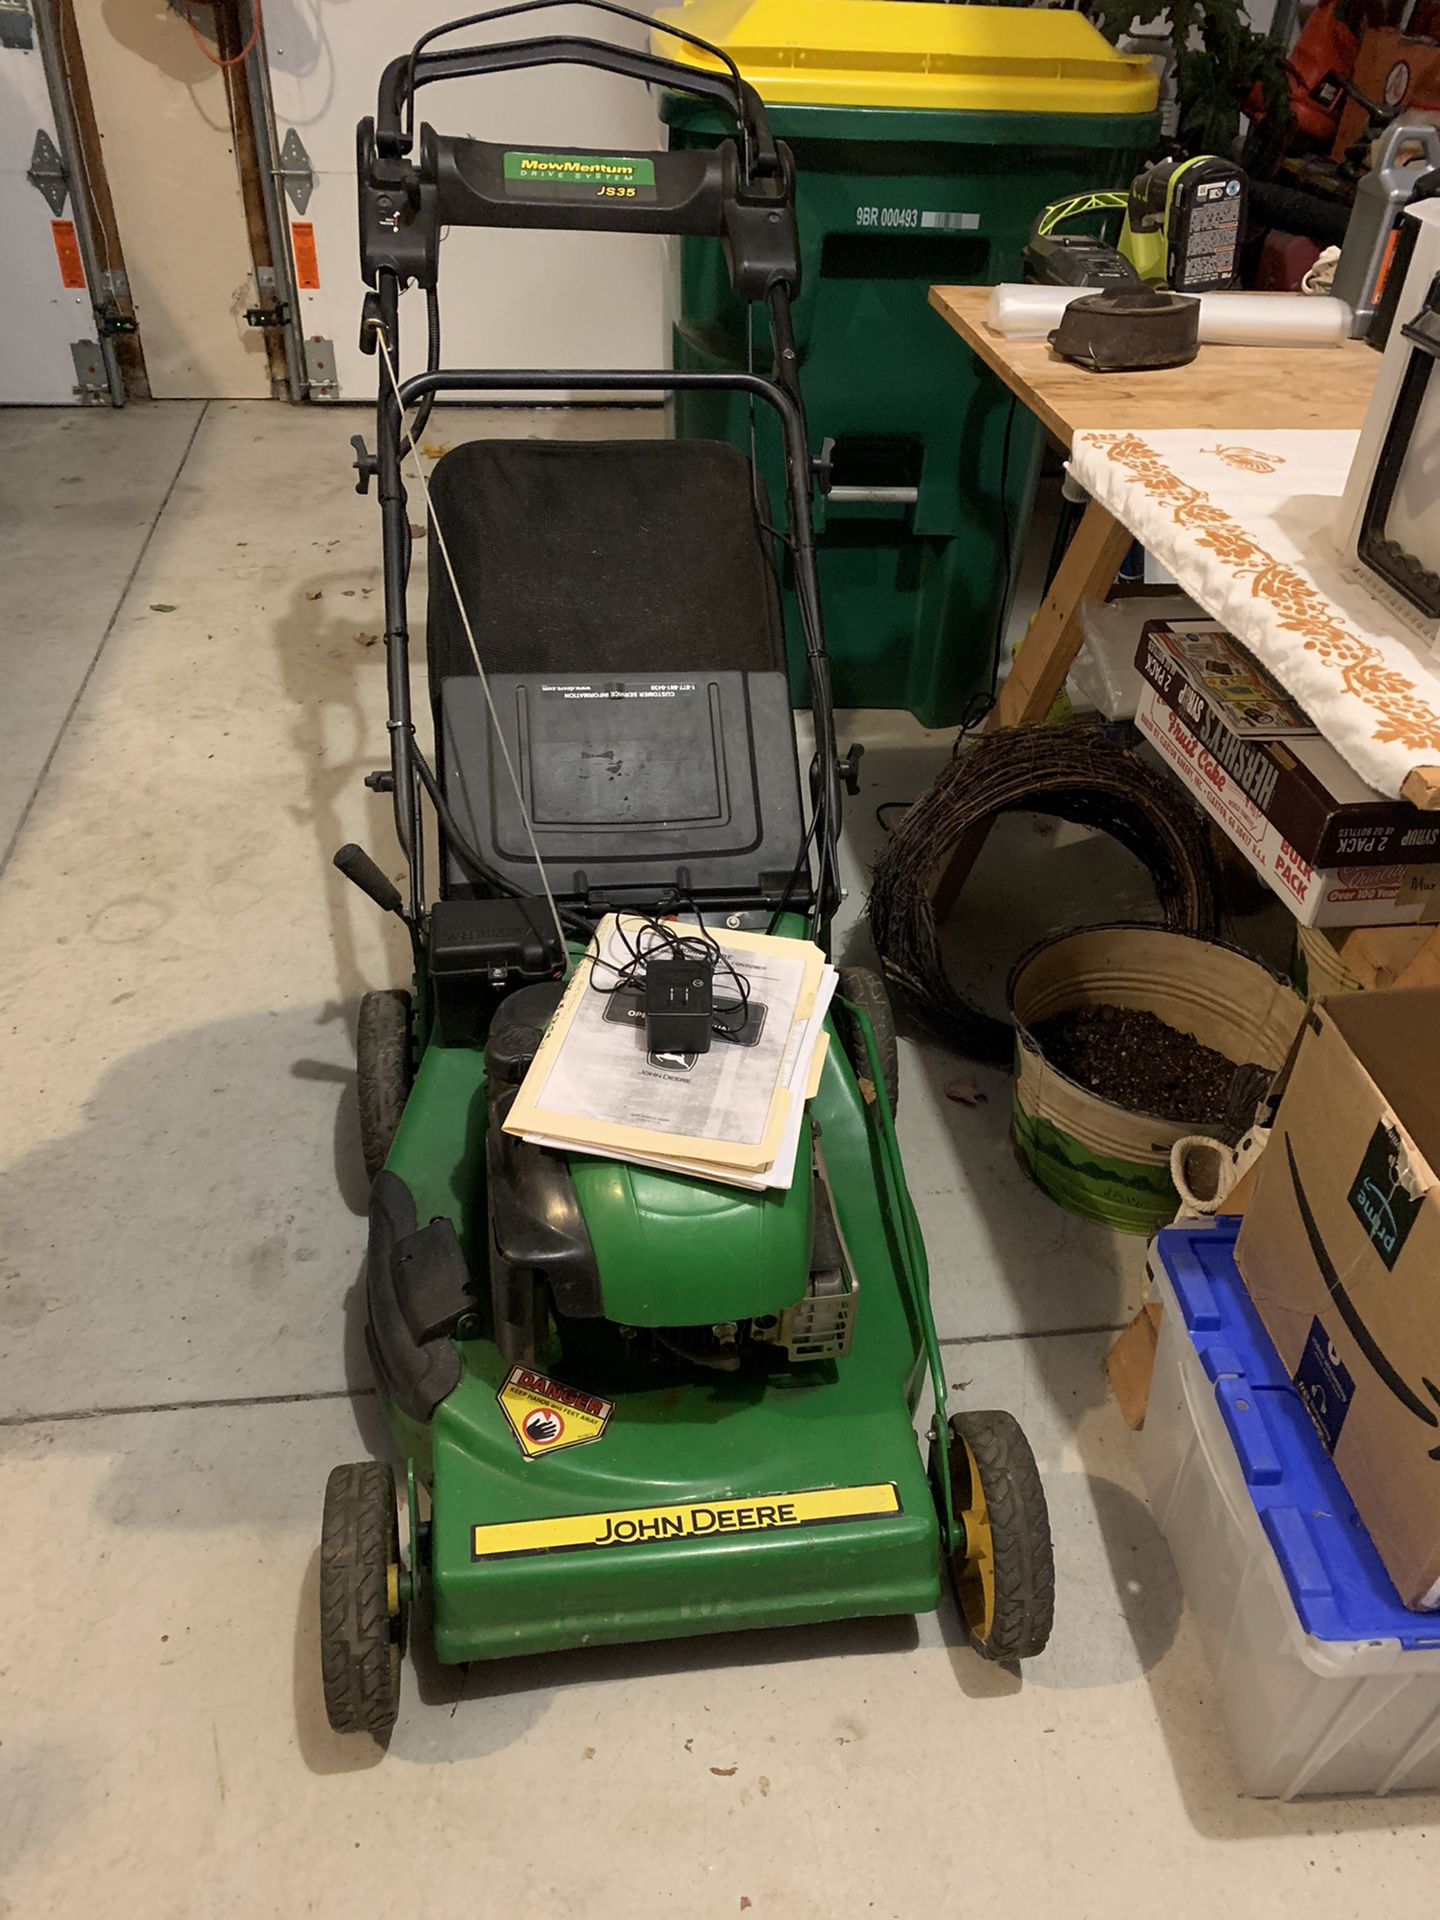 John Deere lawn mower JS35 rechargeable (doesn’t work but it should be an easy fix).